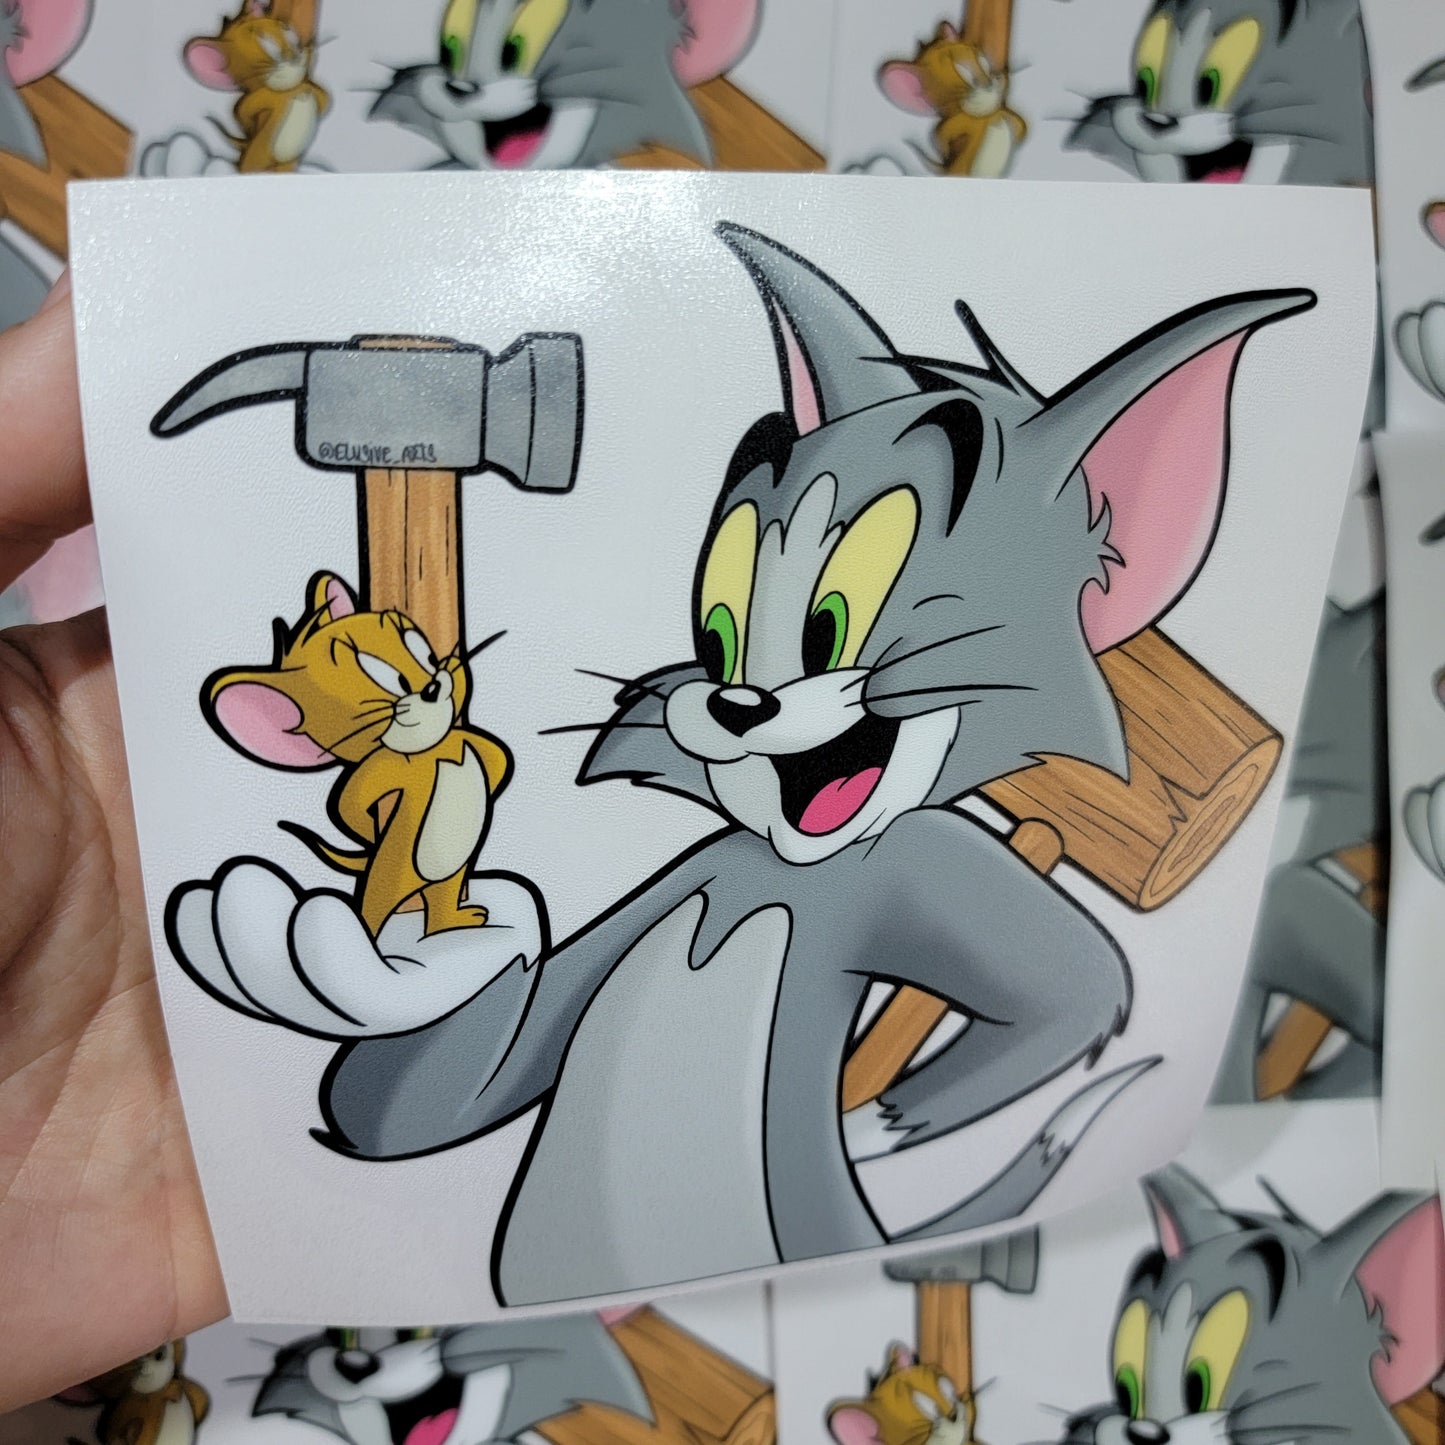 Tom N' Jerry